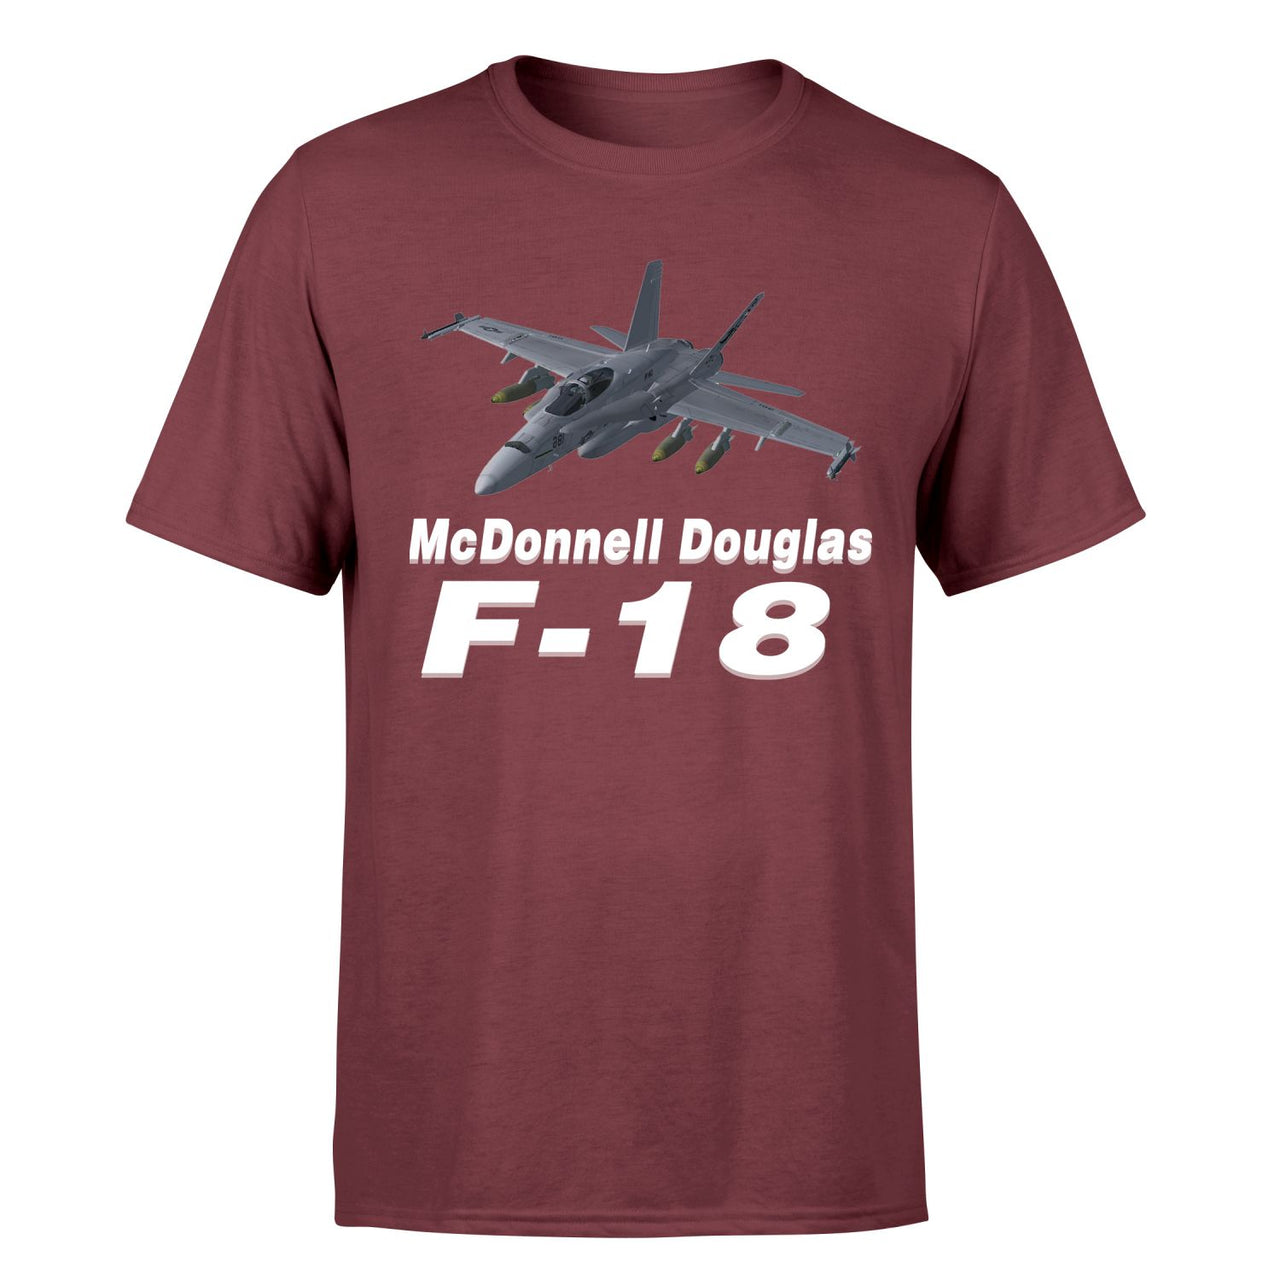 The McDonnell Douglas F18 Designed T-Shirts